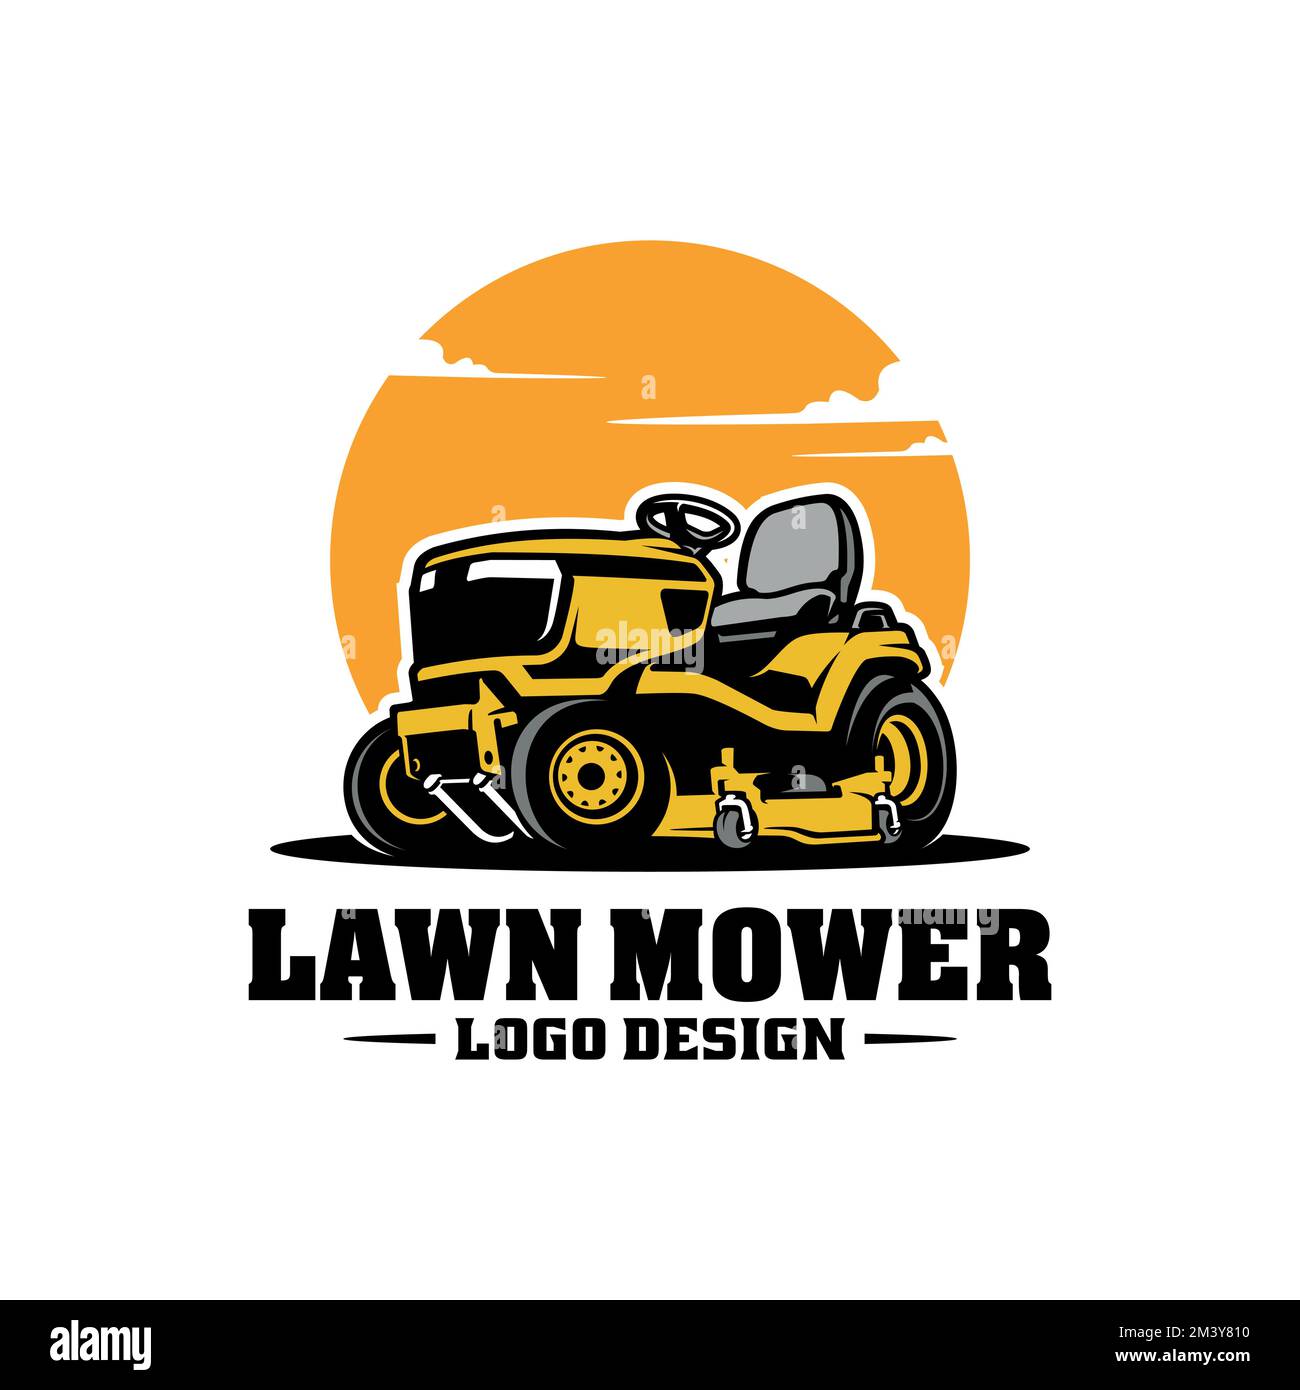 a lawn mower logo design icon against orange sun Stock Vector